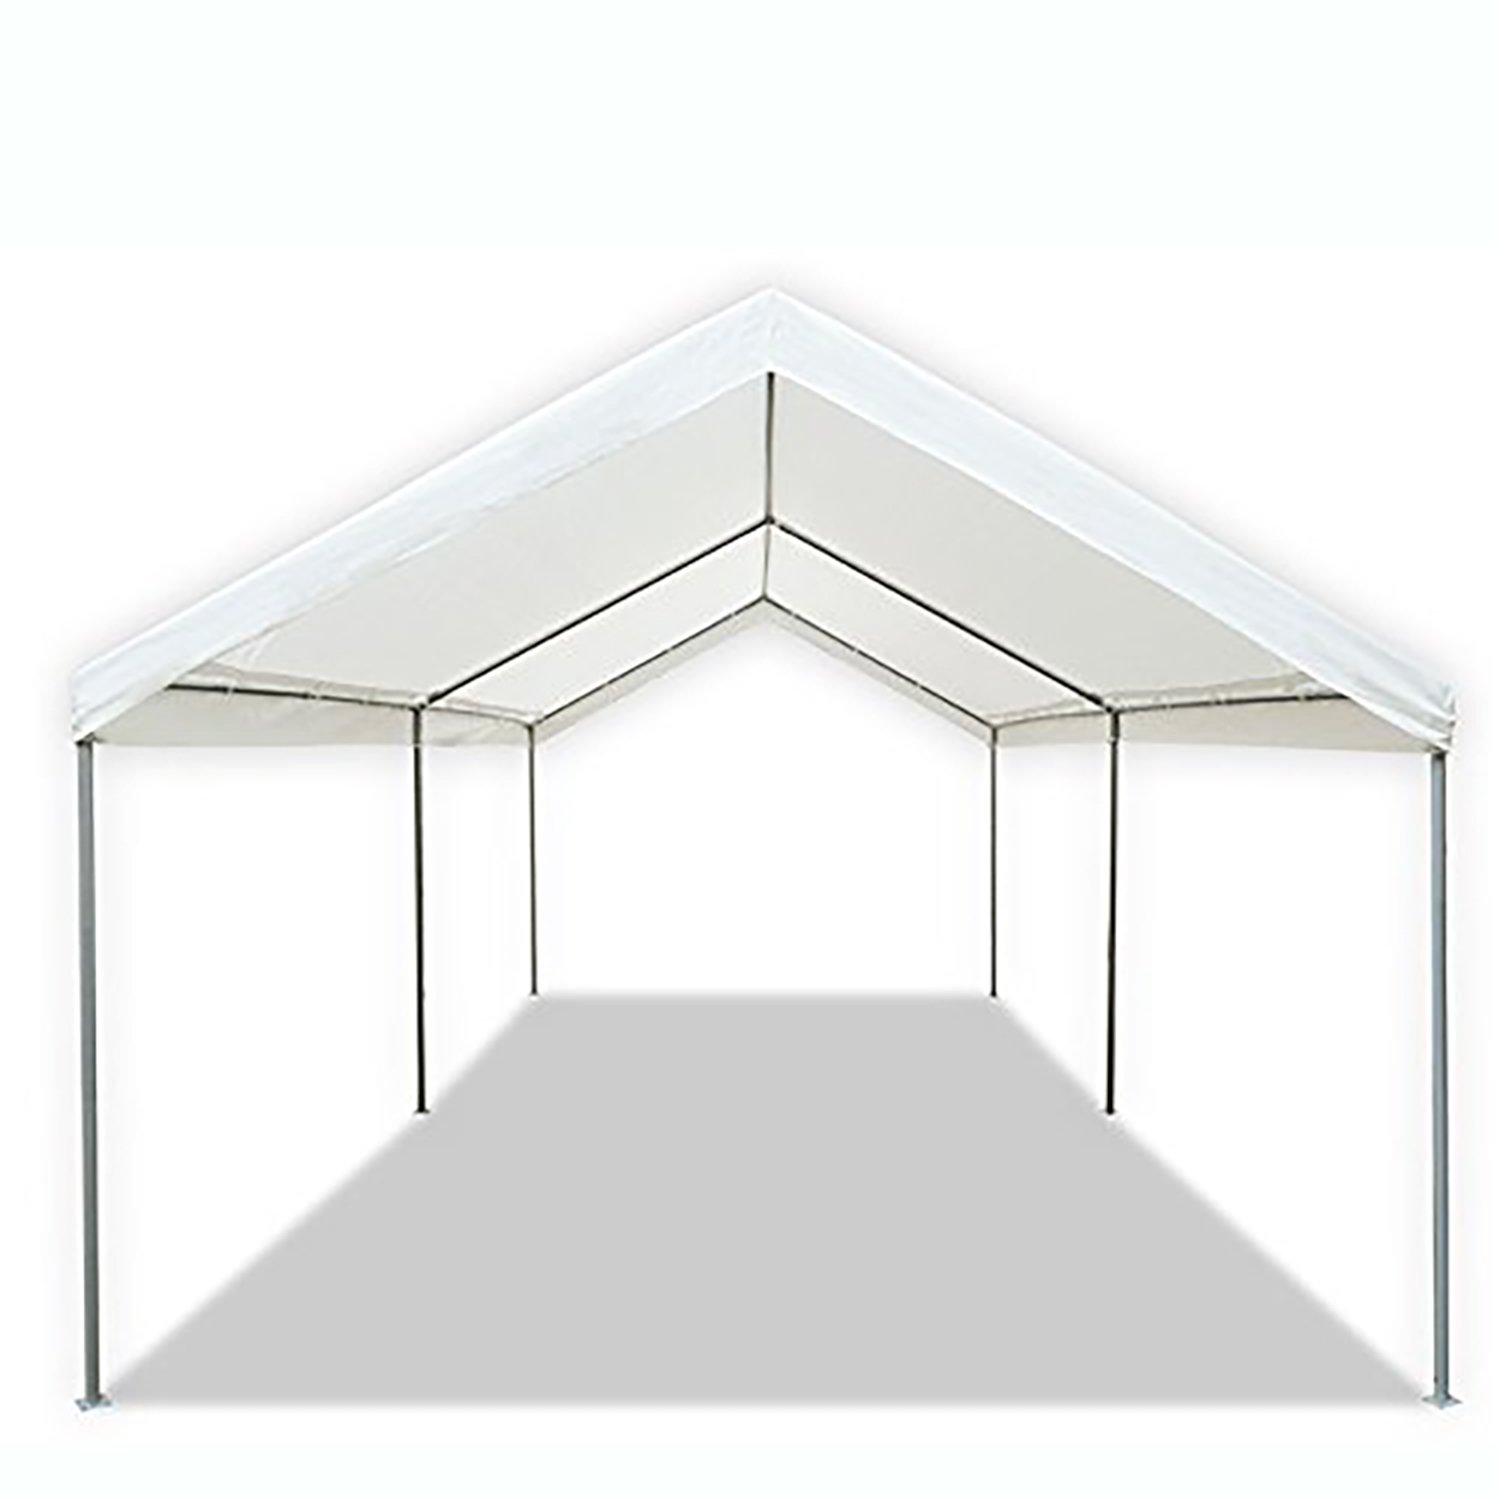 Caravan Canopy Domain Basic 10' W x 20' L x 8.5' H Metal Steel Frame & Polyester Top Carport Shelter - image 3 of 5